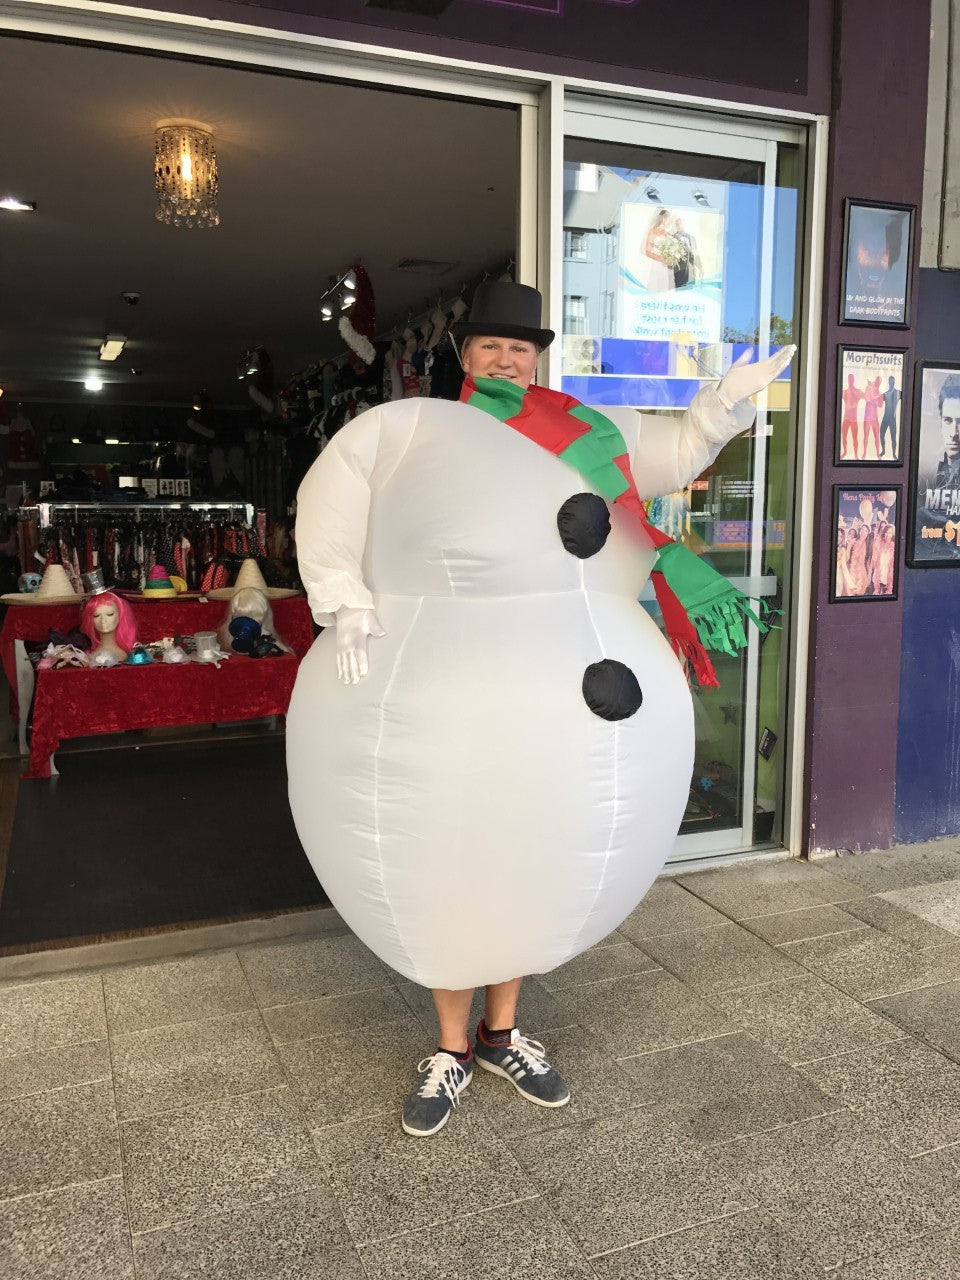 Christmas Snowman Inflatable Costume